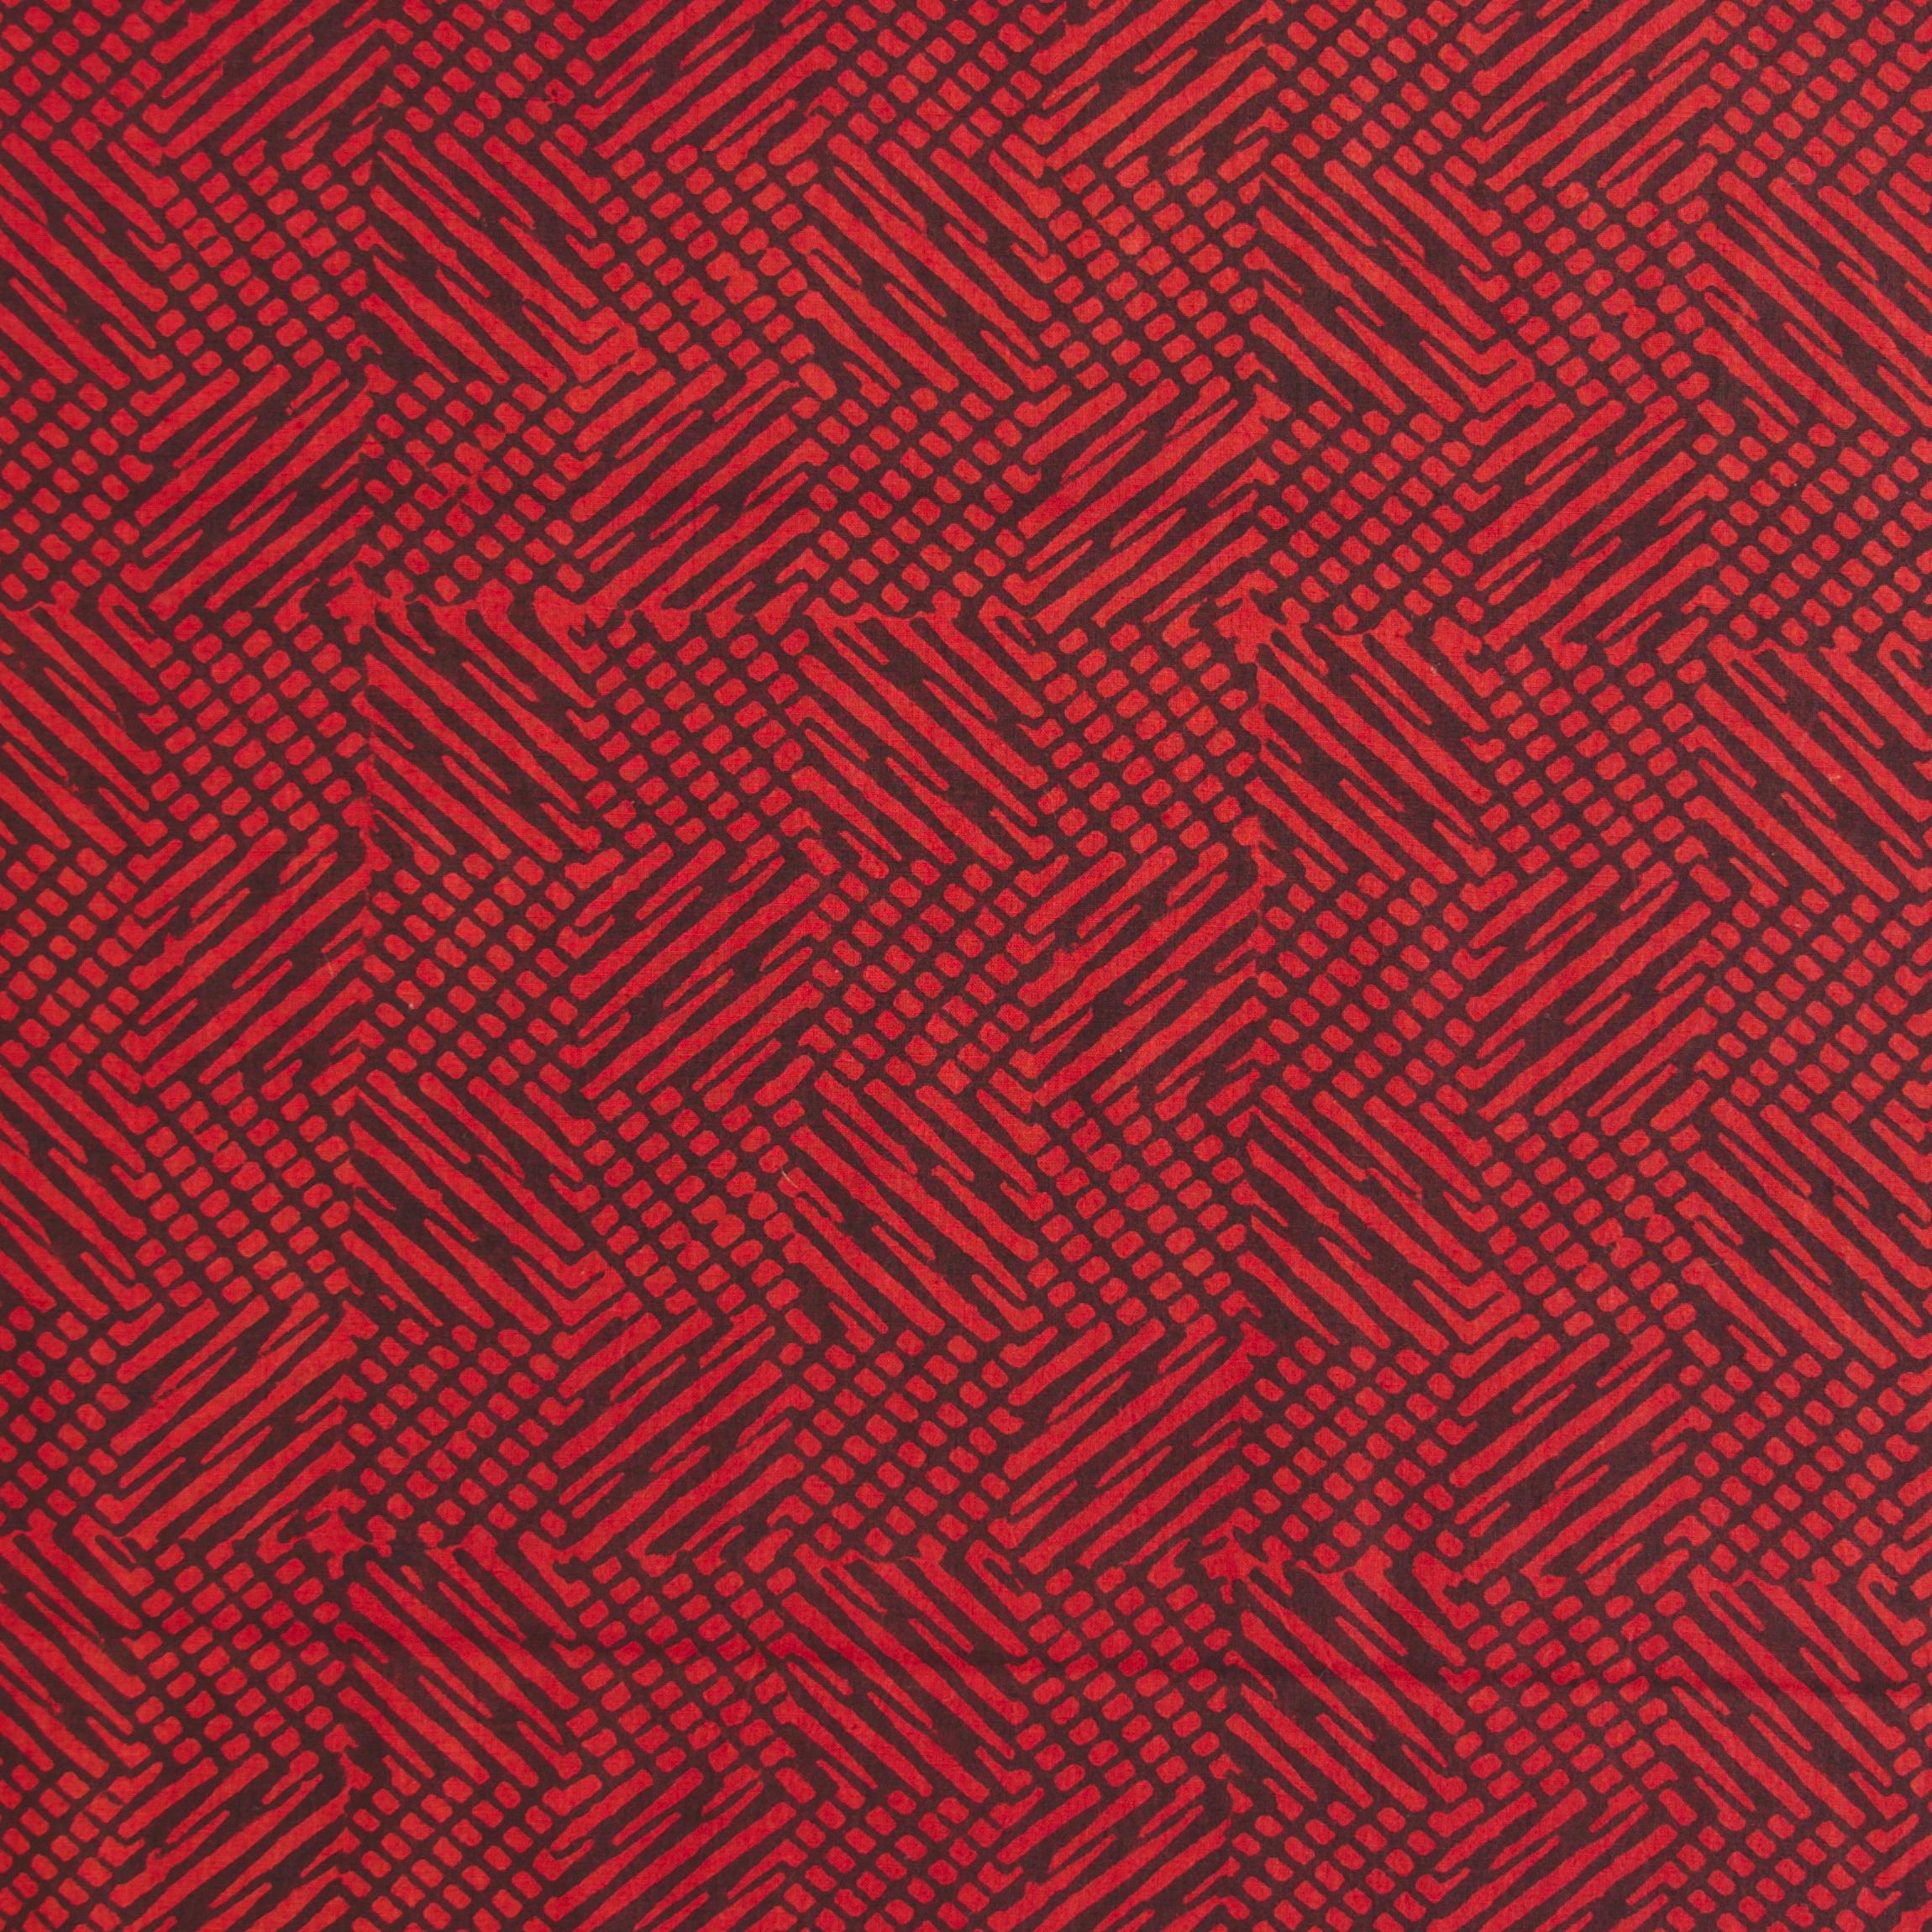 SIK29 - Block-Printed Cotton Yardage Sample - Squiggle Design - Black Iron and Red Alizarin Dye - Flat